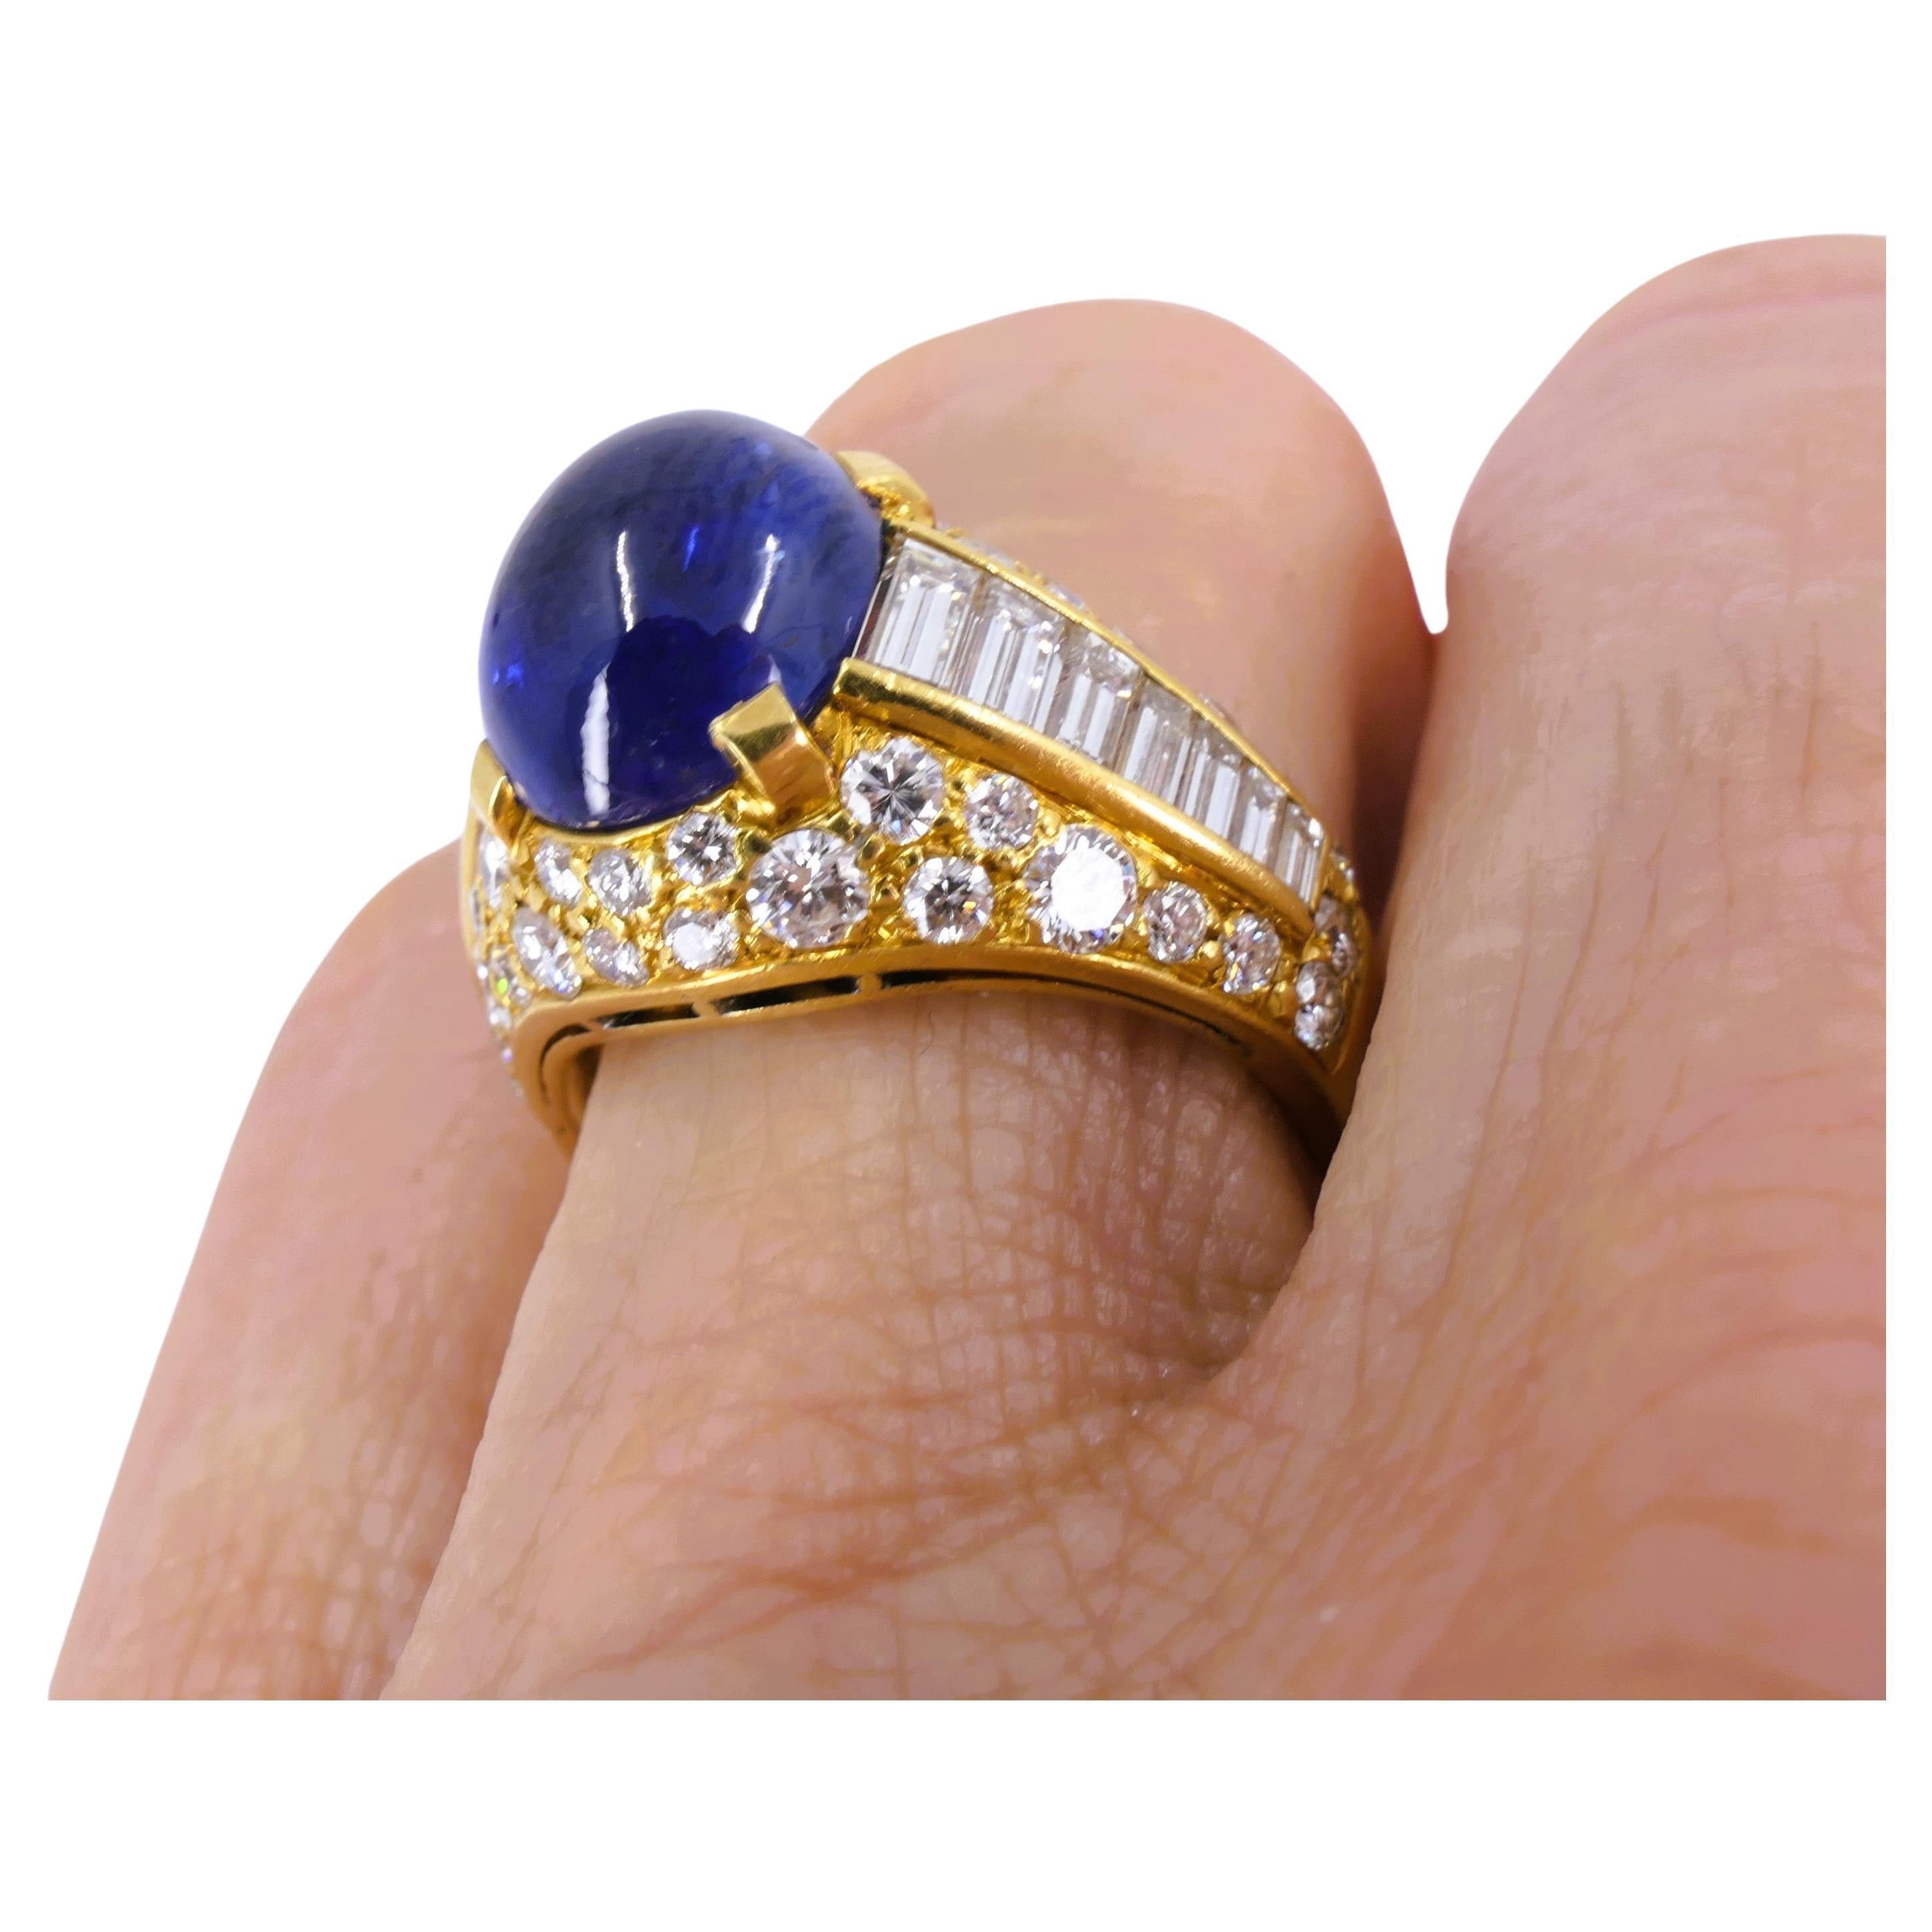 Mixed Cut Vintage Bulgari Trombino Ring Sapphire Diamond Gold 18k Estate Jewelry For Sale